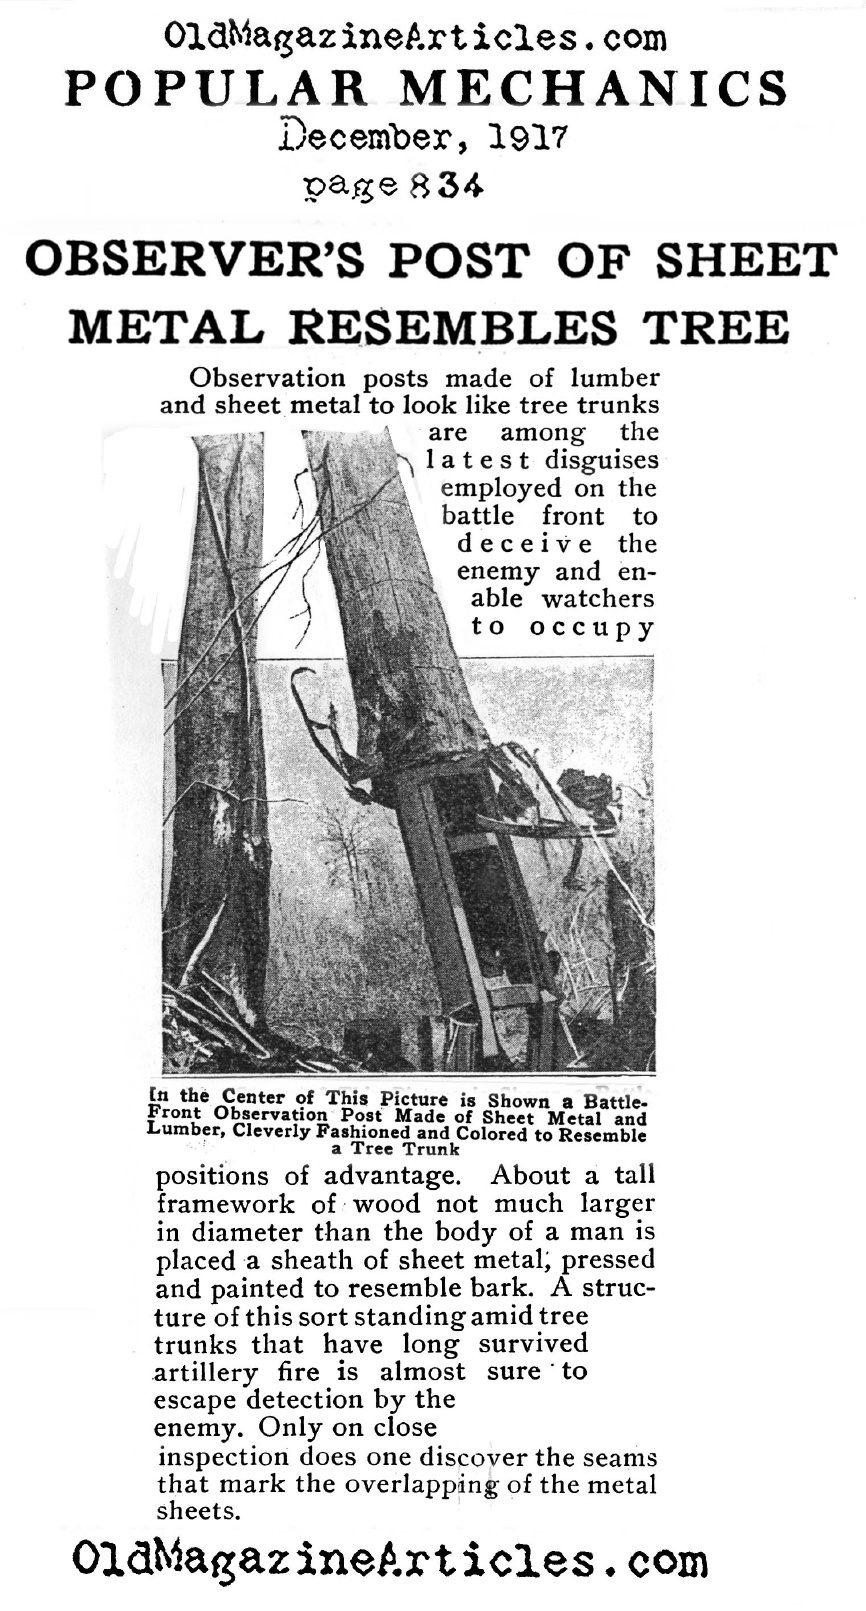 The Steel Tree Stump, Part I (Popular Mechanics, 1917)